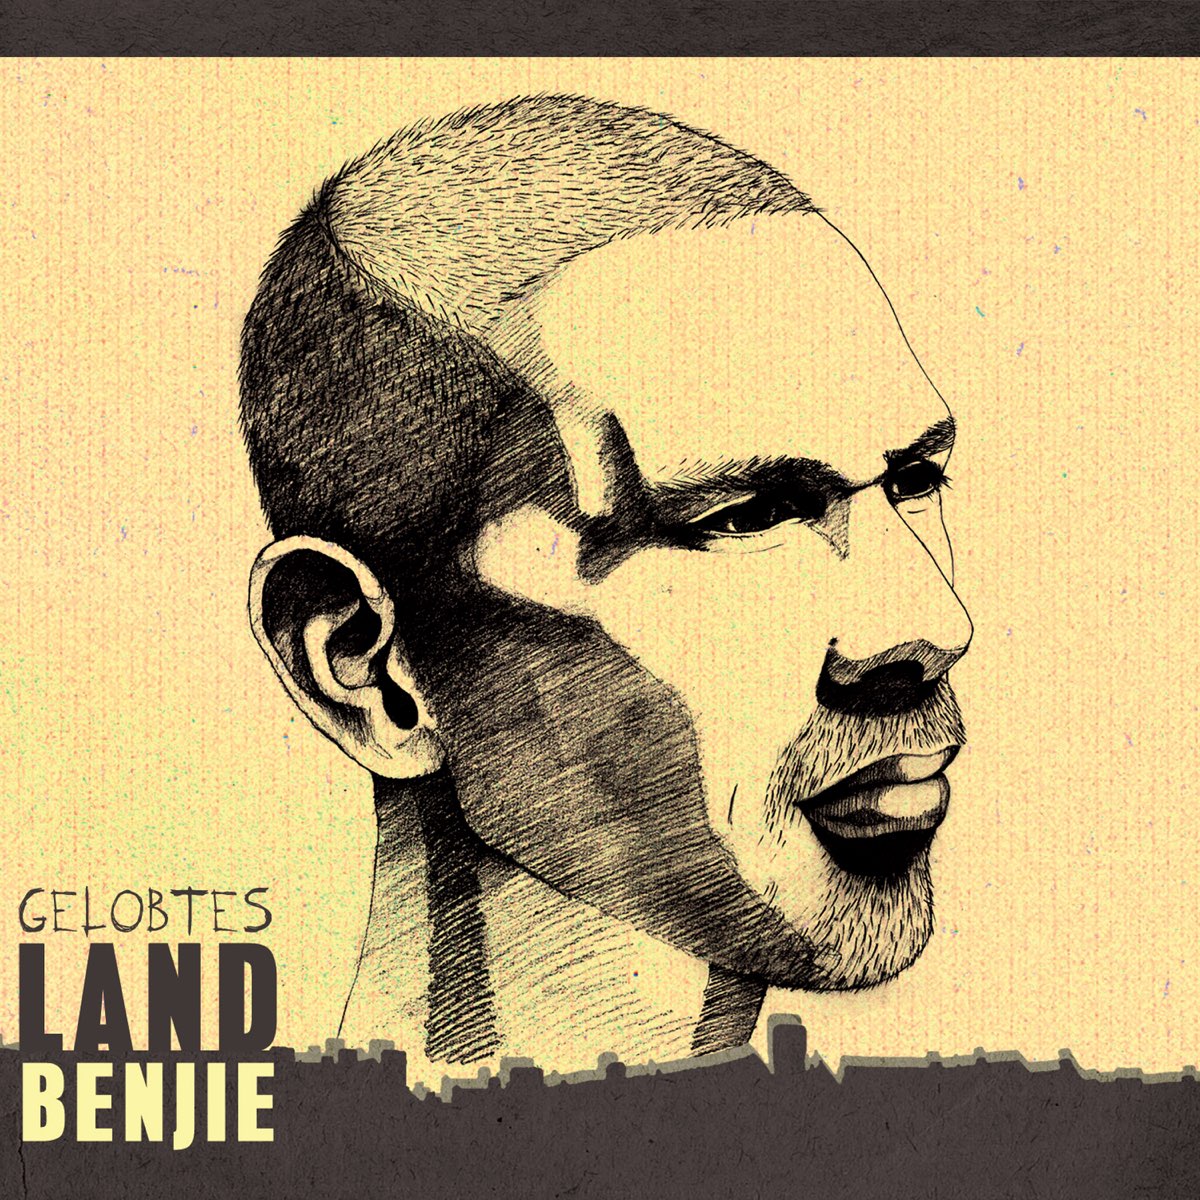 Gelobtes Land - Album by Benjie - Apple Music